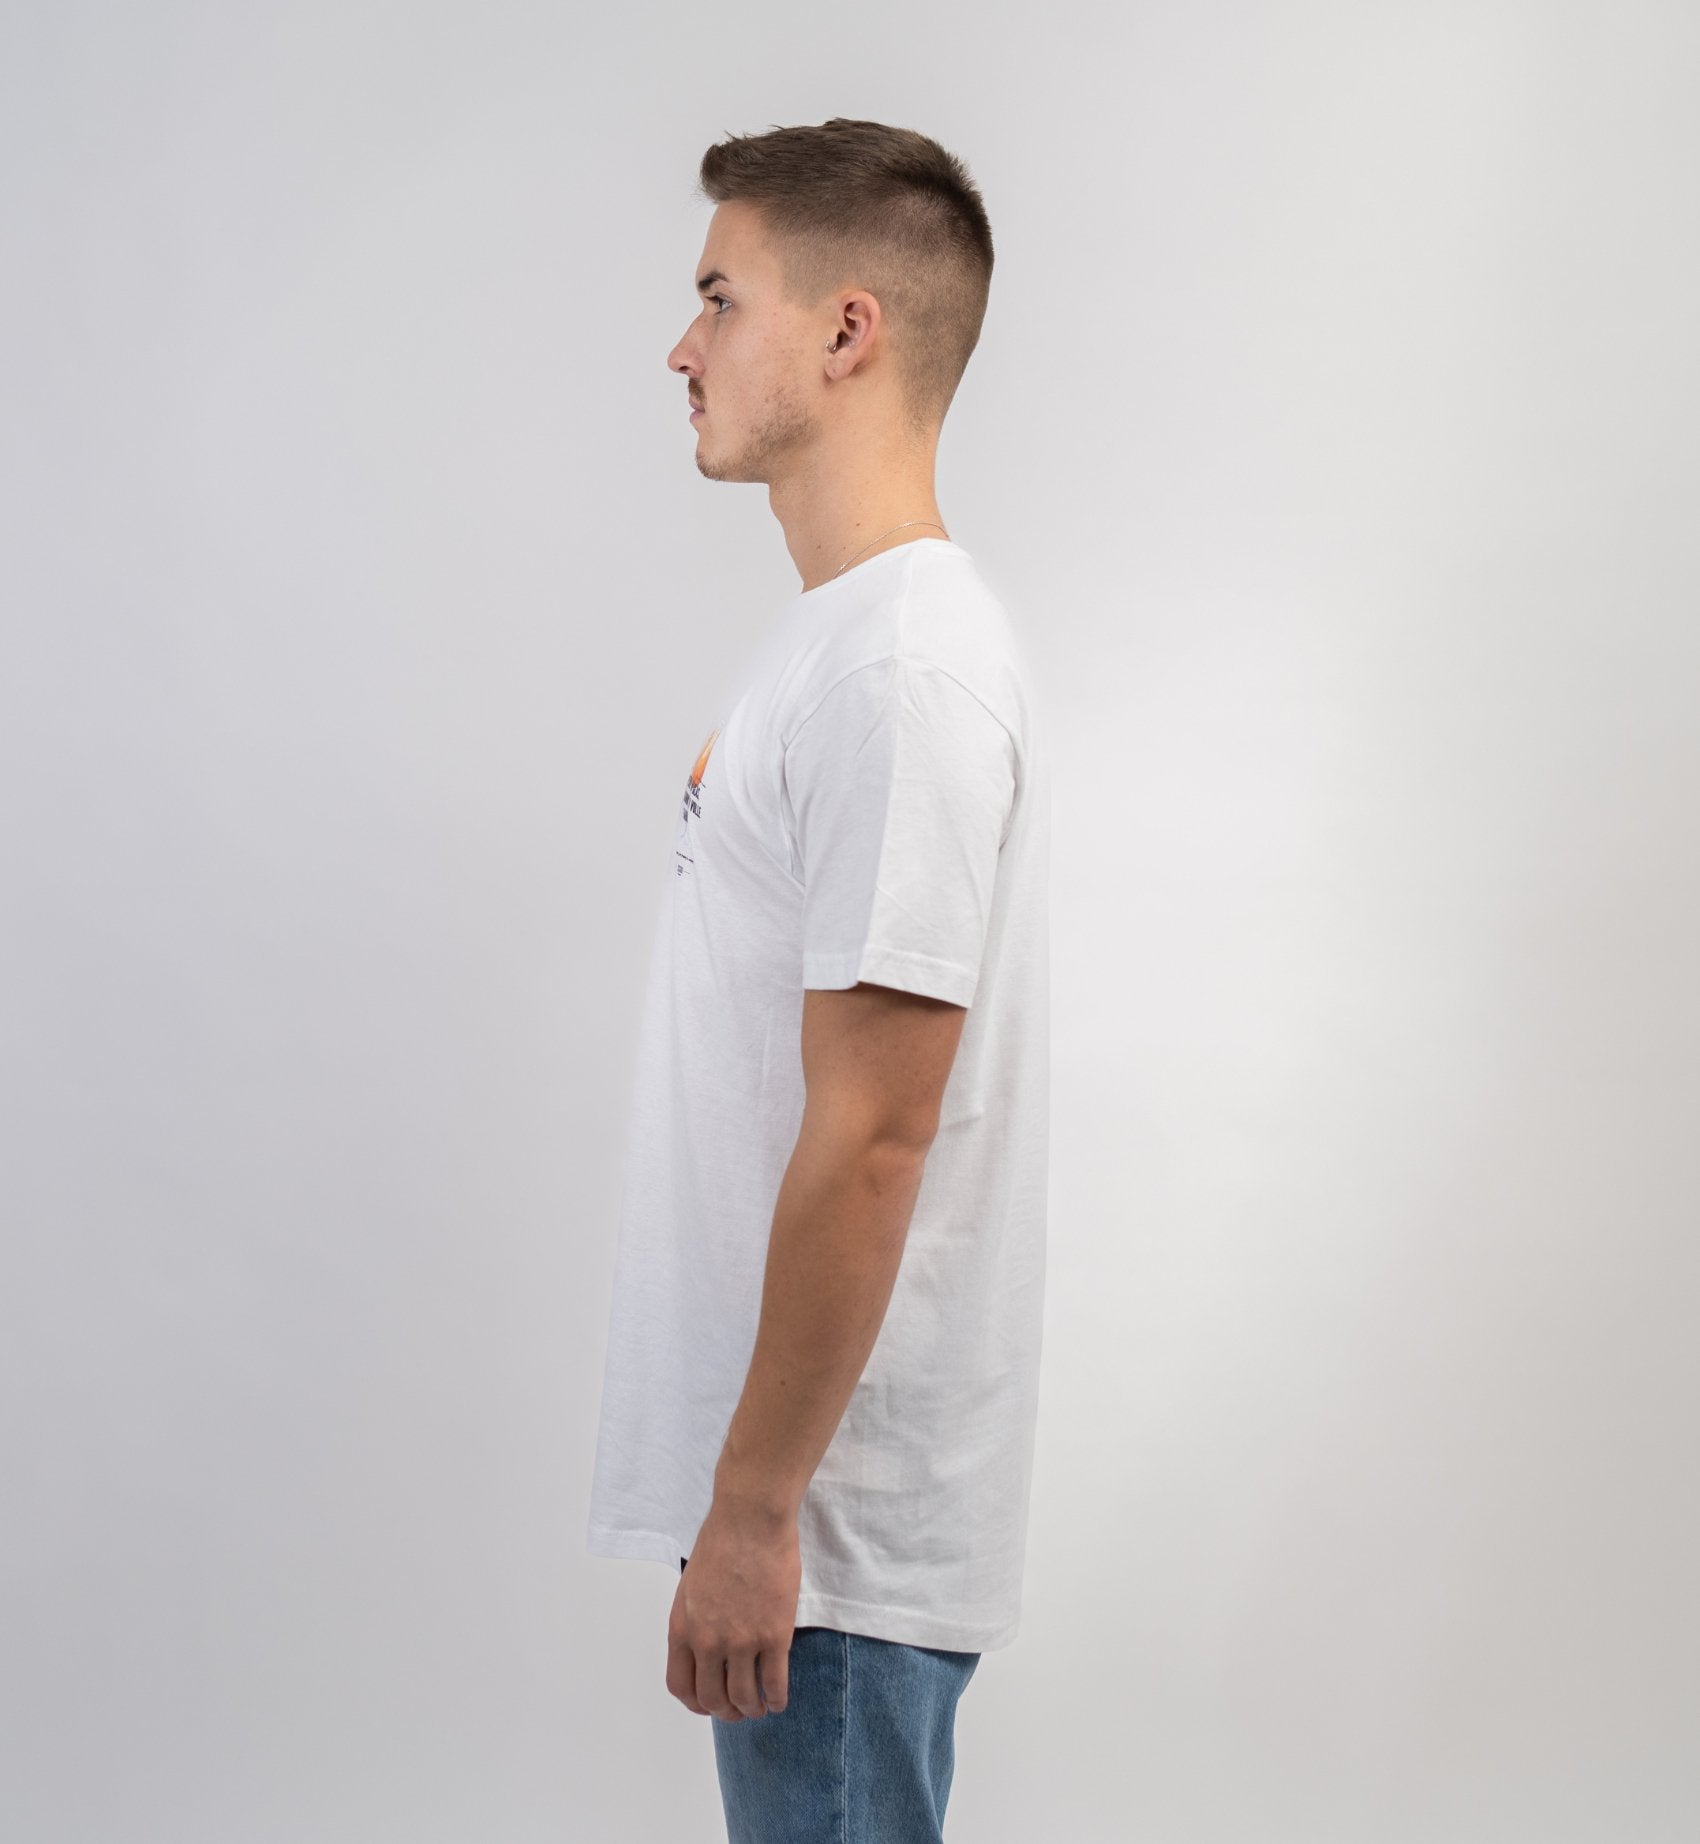 NB "Aperol im Glas" Oversize Shirt - new-bav